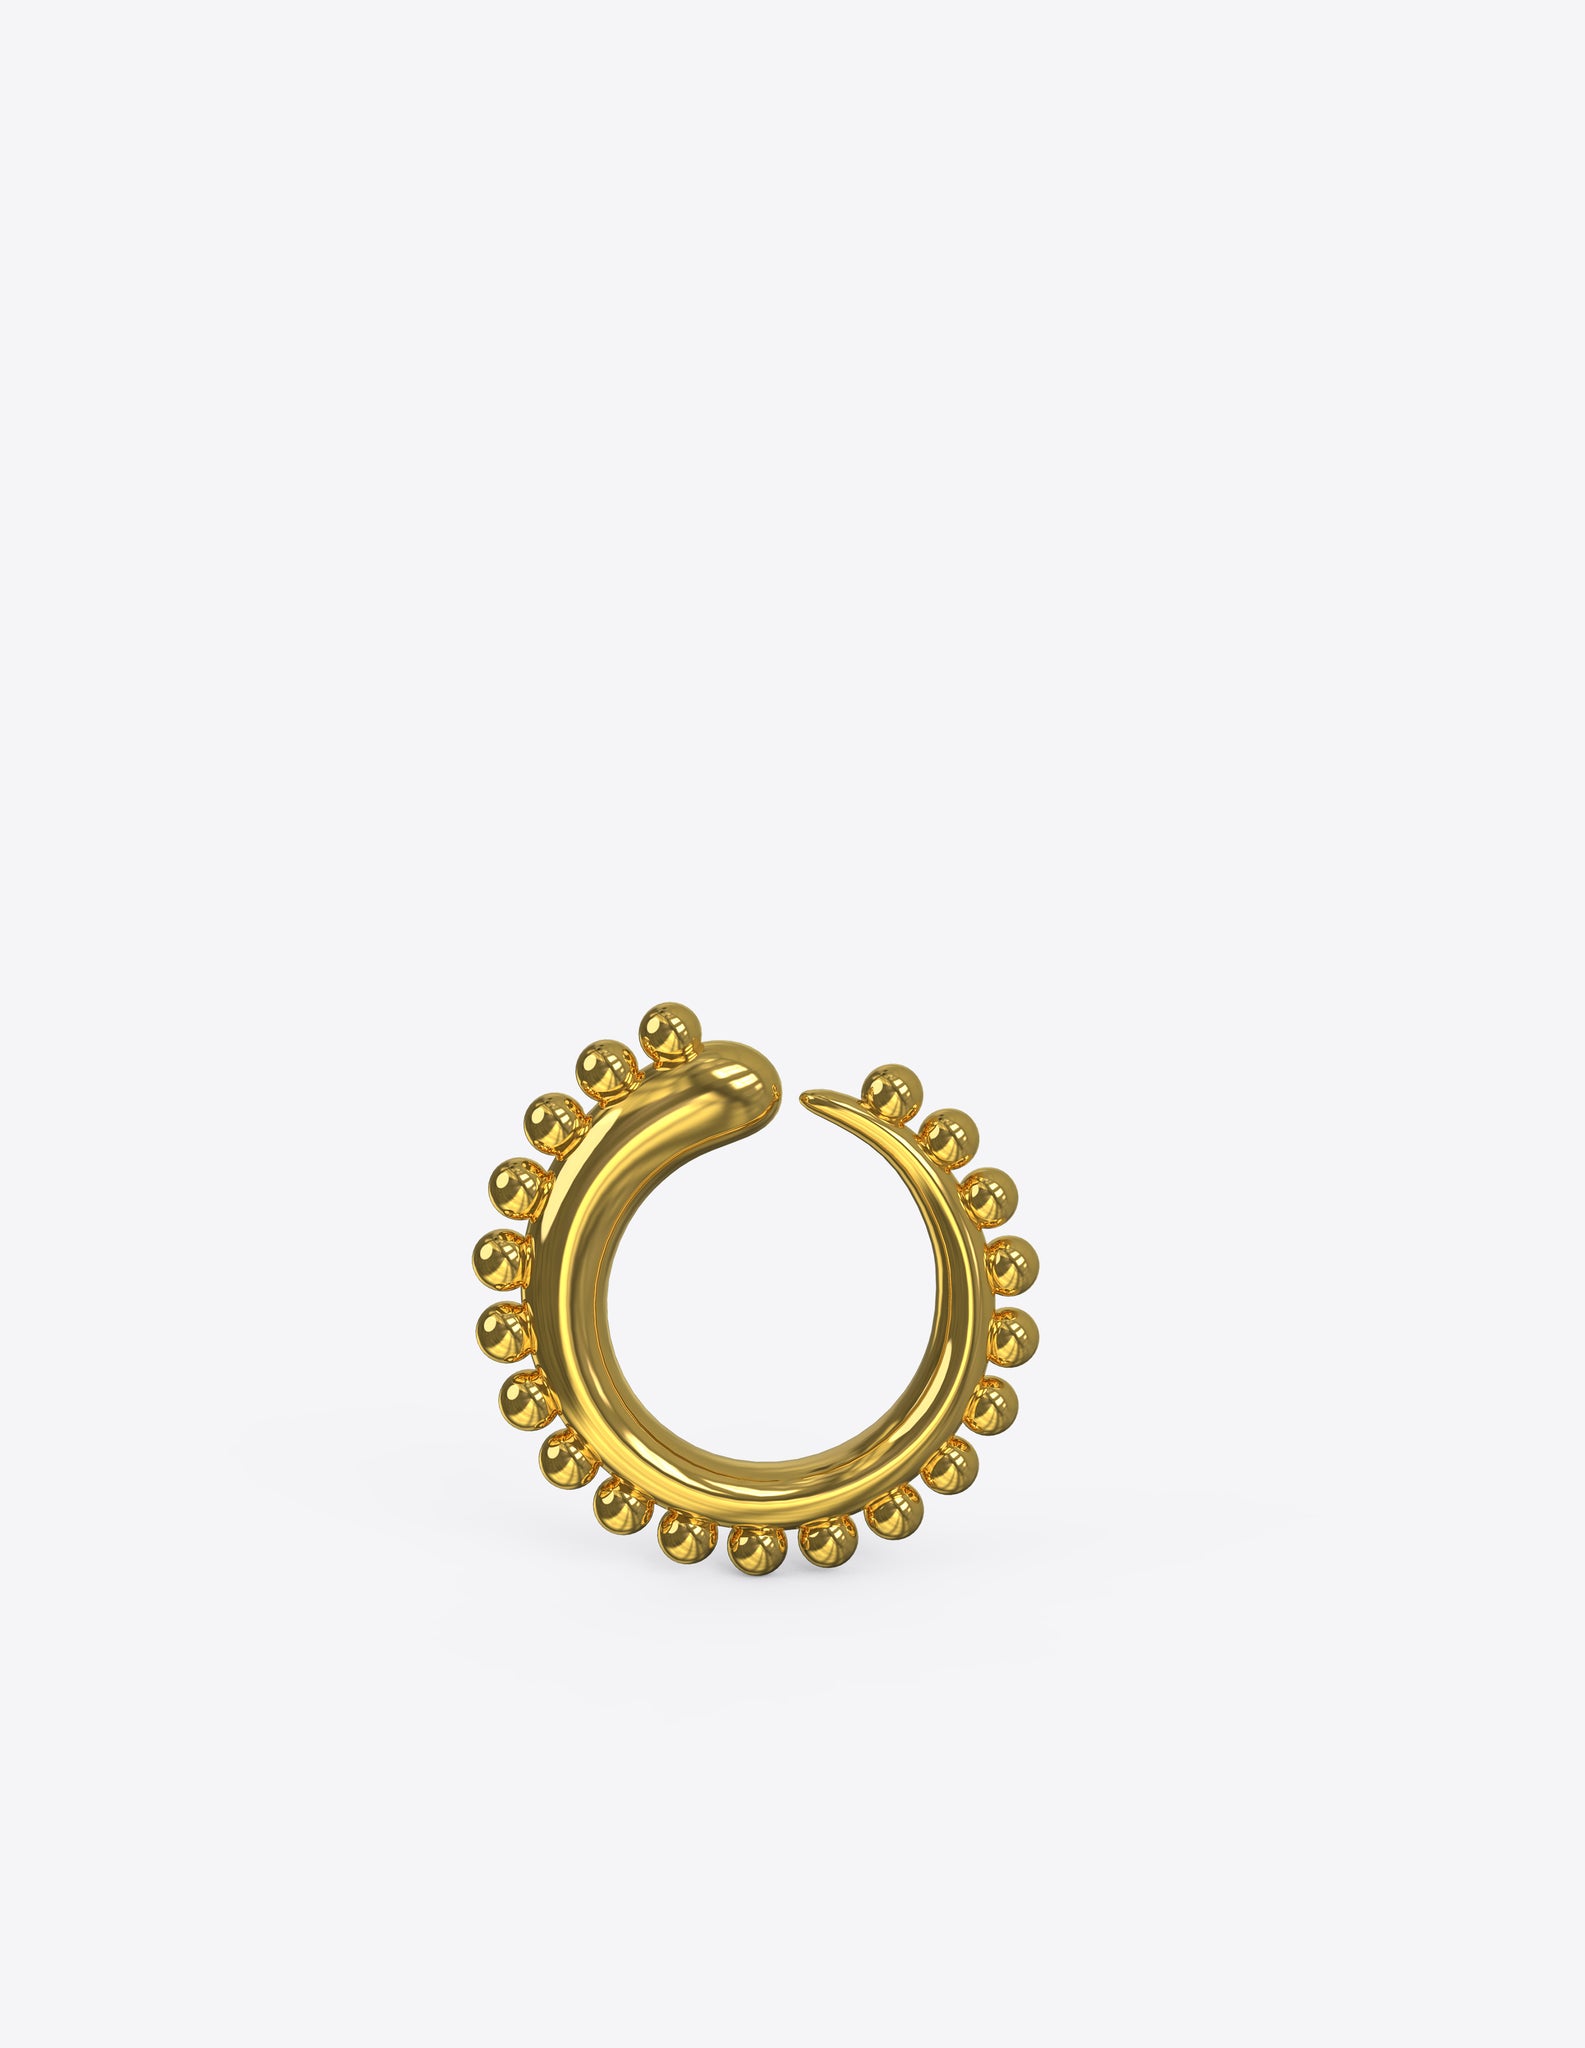 Khartoum Stacking Ring Embellished in Polished Gold Vermeil